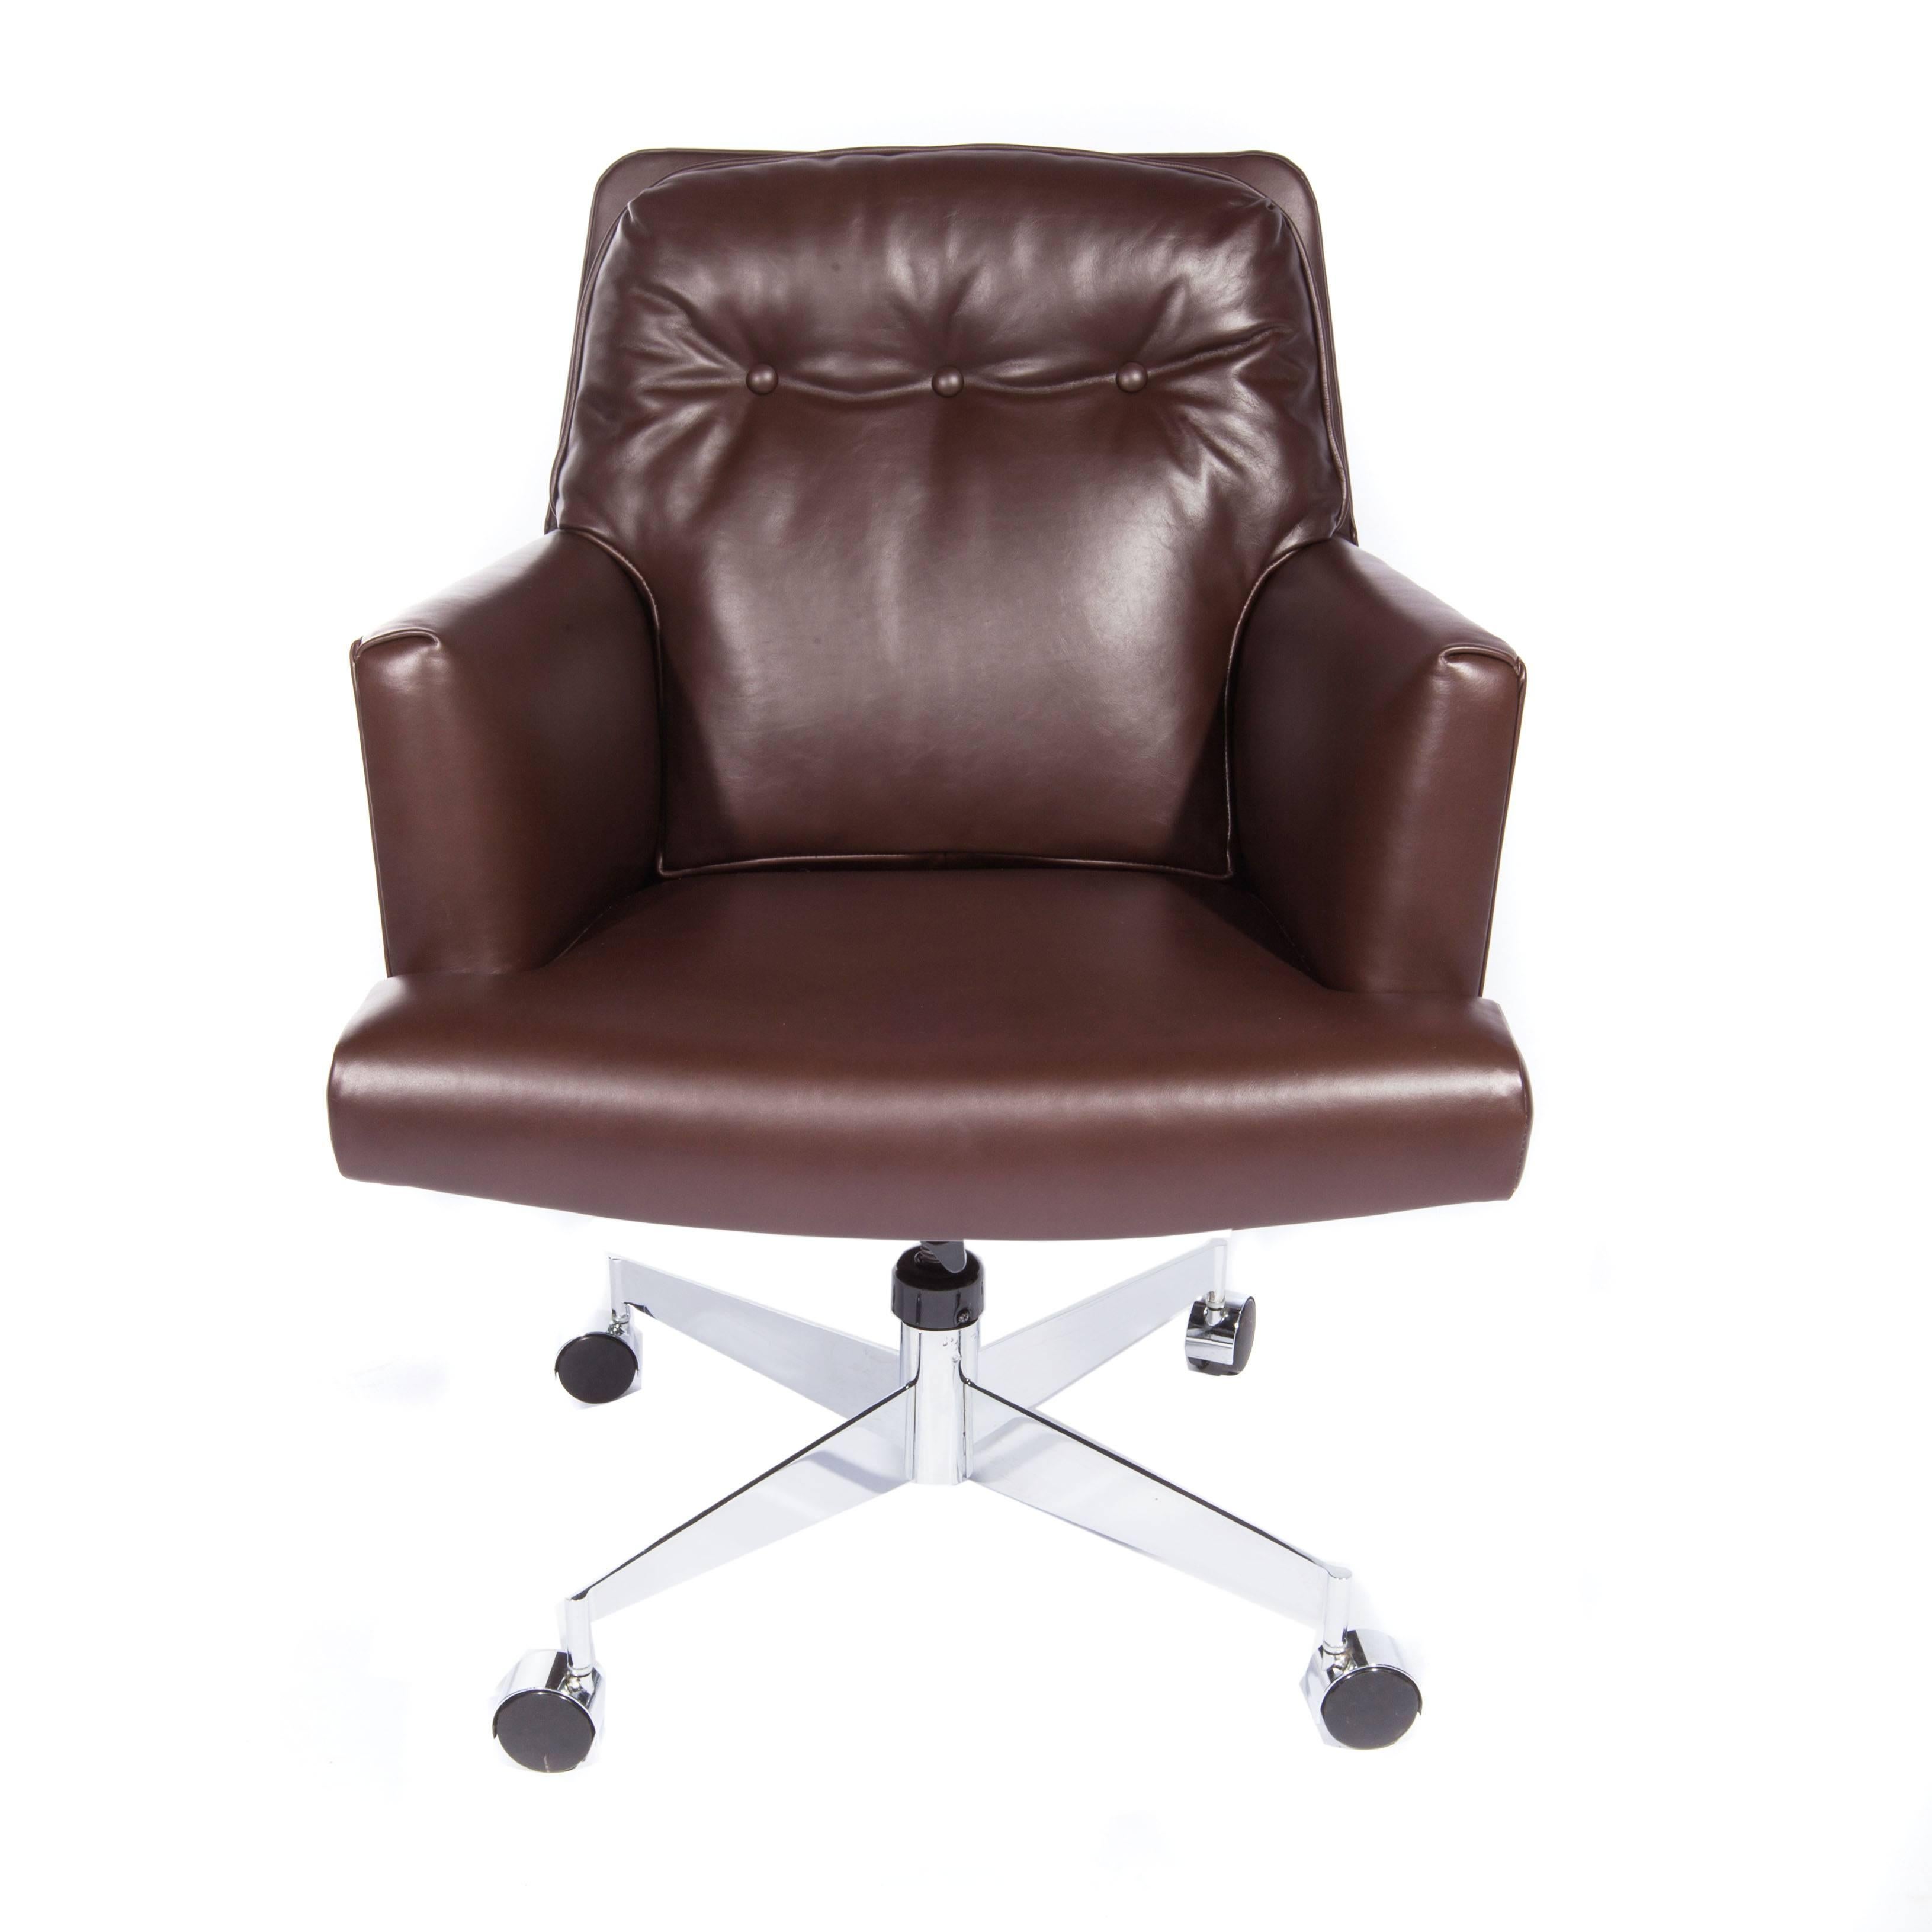 Leather and Chrome Executive Swivel Chair by Dunbar, circa 1960s